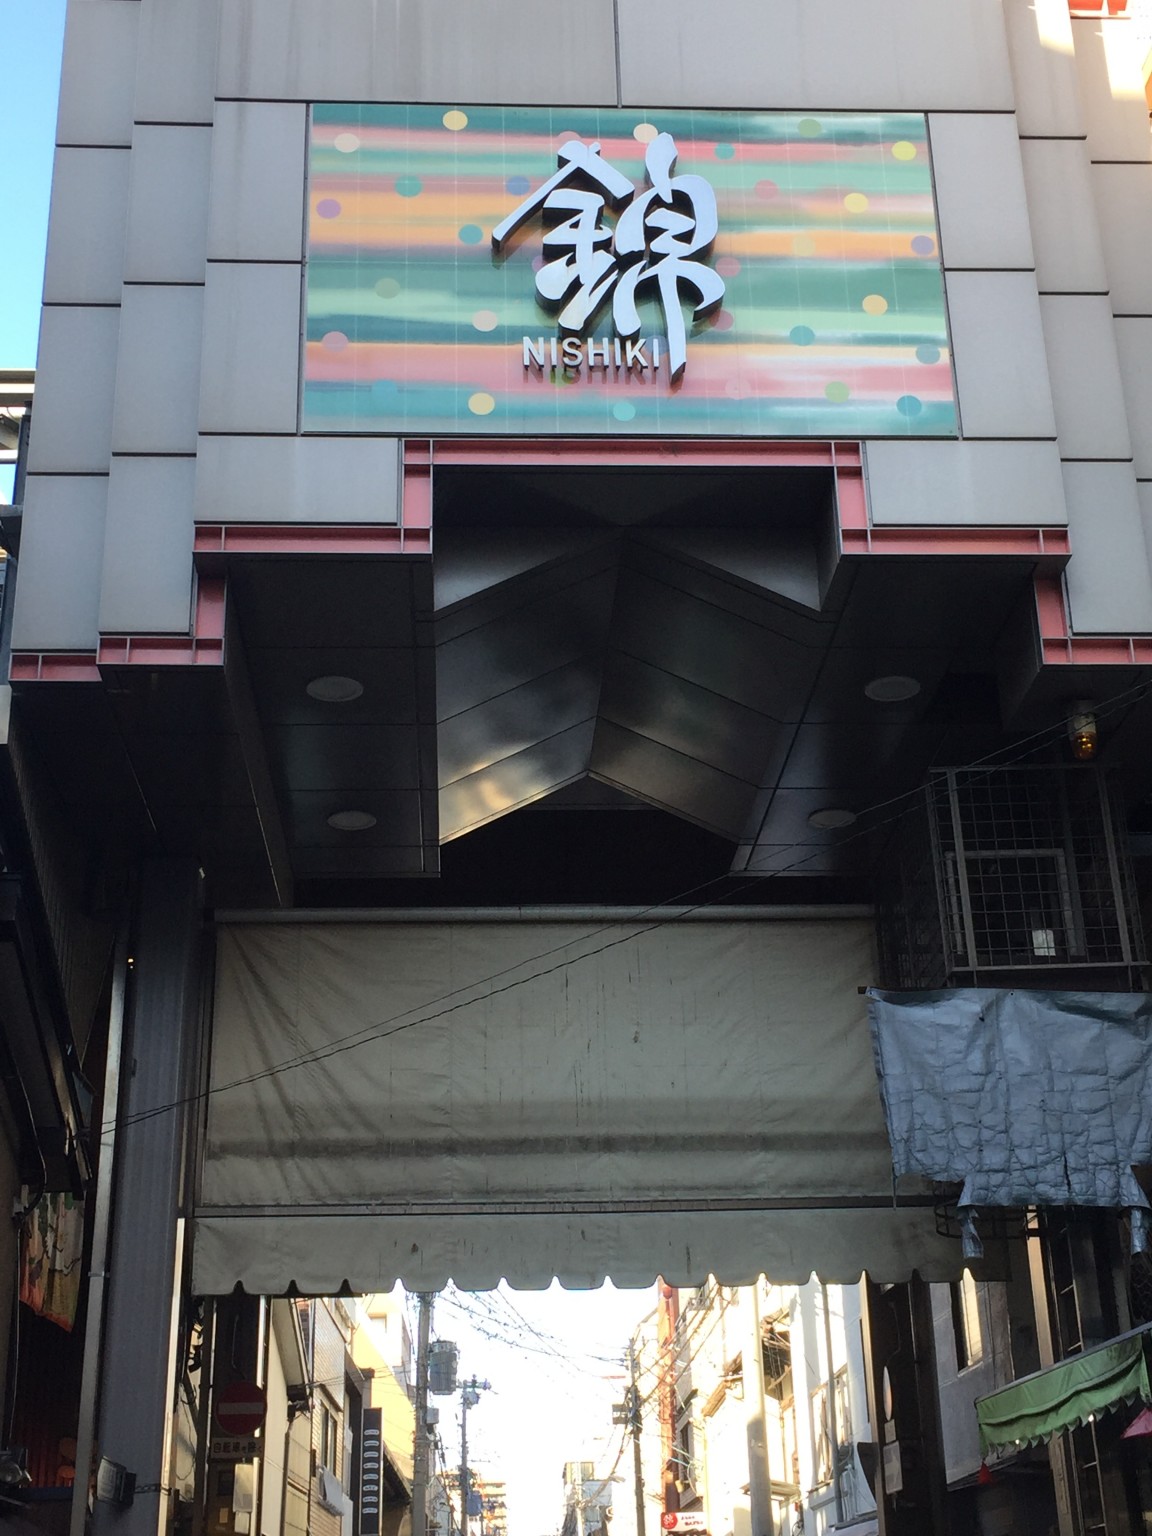 Nishiki market